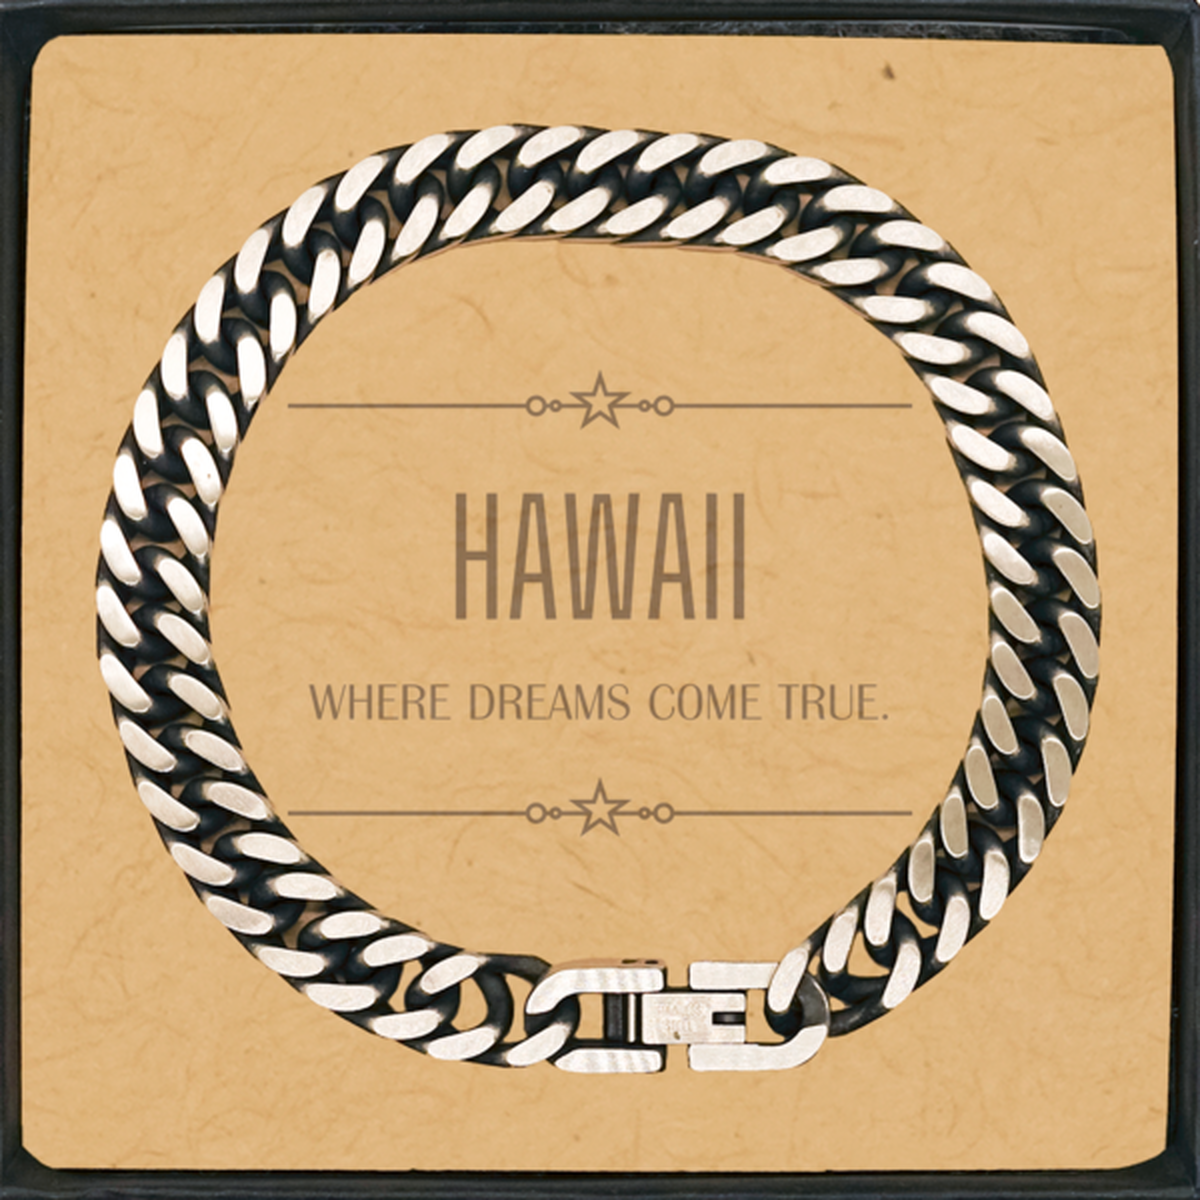 Love Hawaii State Cuban Link Chain Bracelet, Hawaii Where dreams come true, Birthday Inspirational Gifts For Hawaii Men, Women, Friends